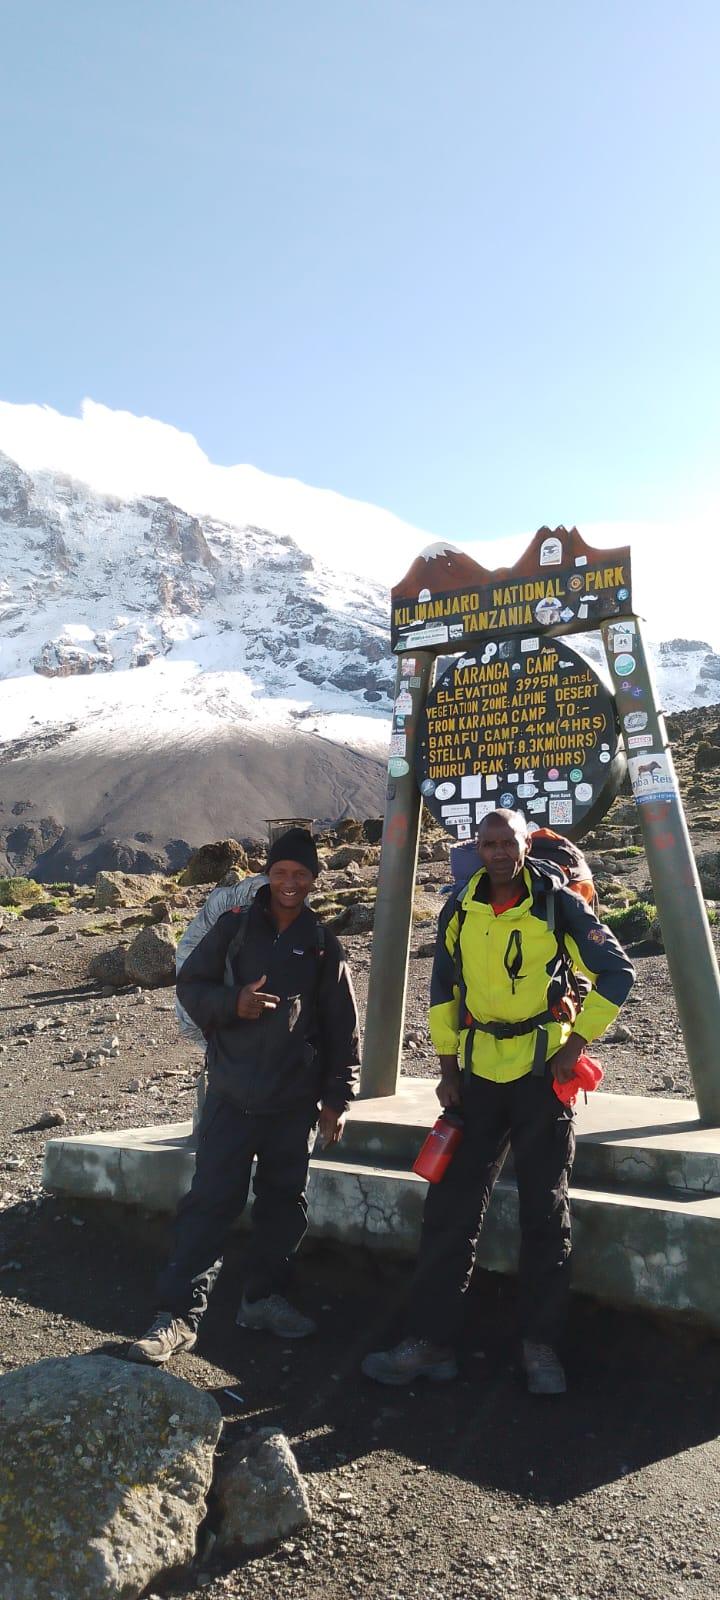 Climbing mount kilimanjaro trekking hiking active adventures epic tours safaris yha kenya travel mountain adventures tanzania tours 12